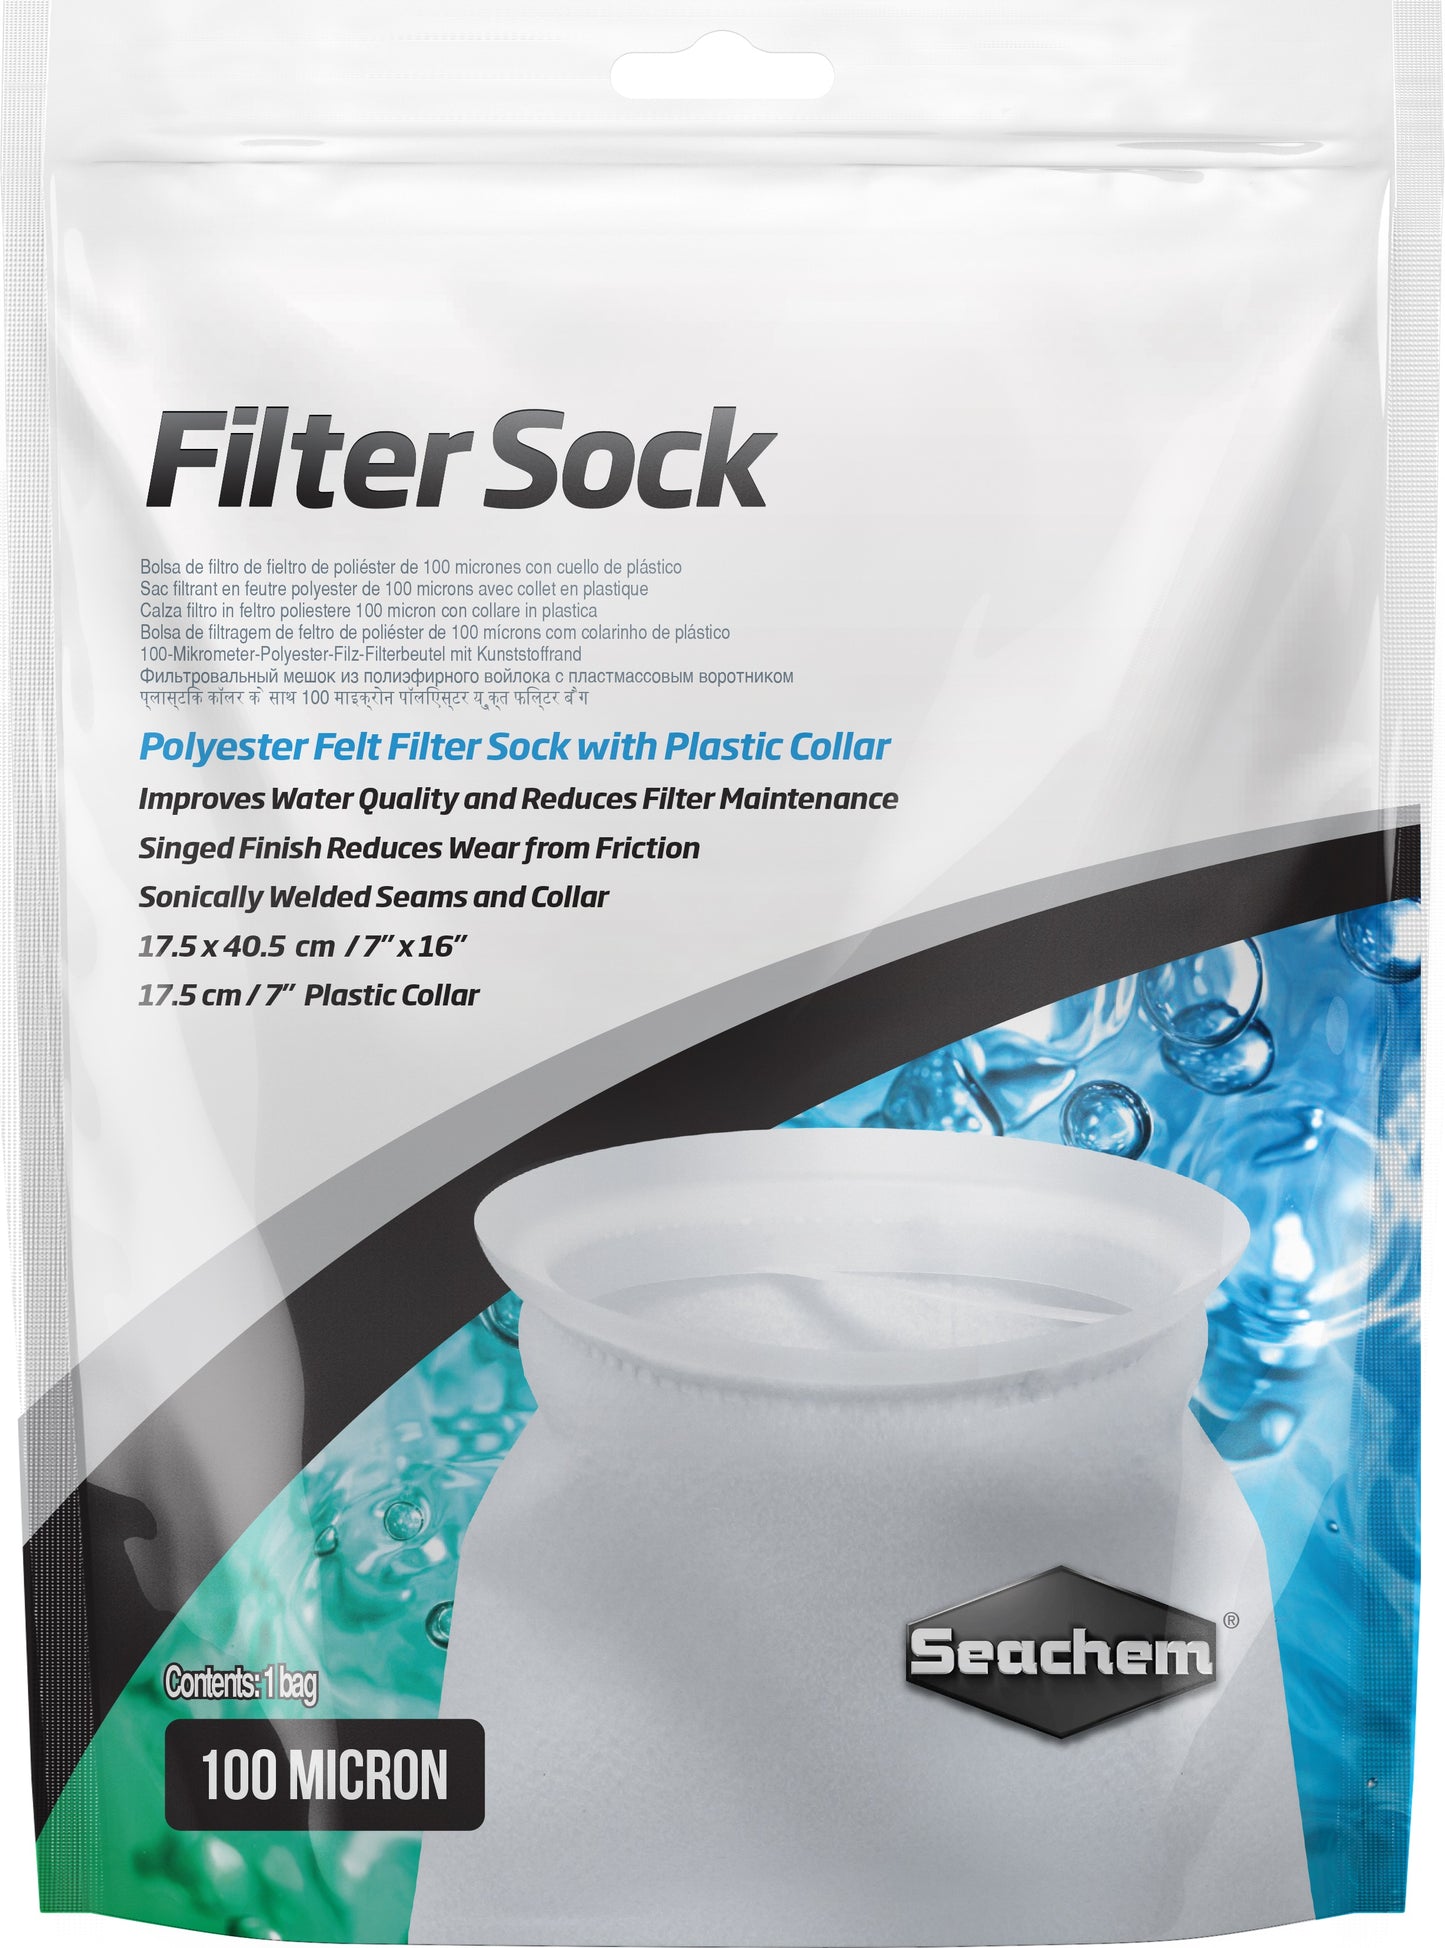 Seachem Filter Sock Polyester Felt Filter Sock with Plastic Collar for Aquariums